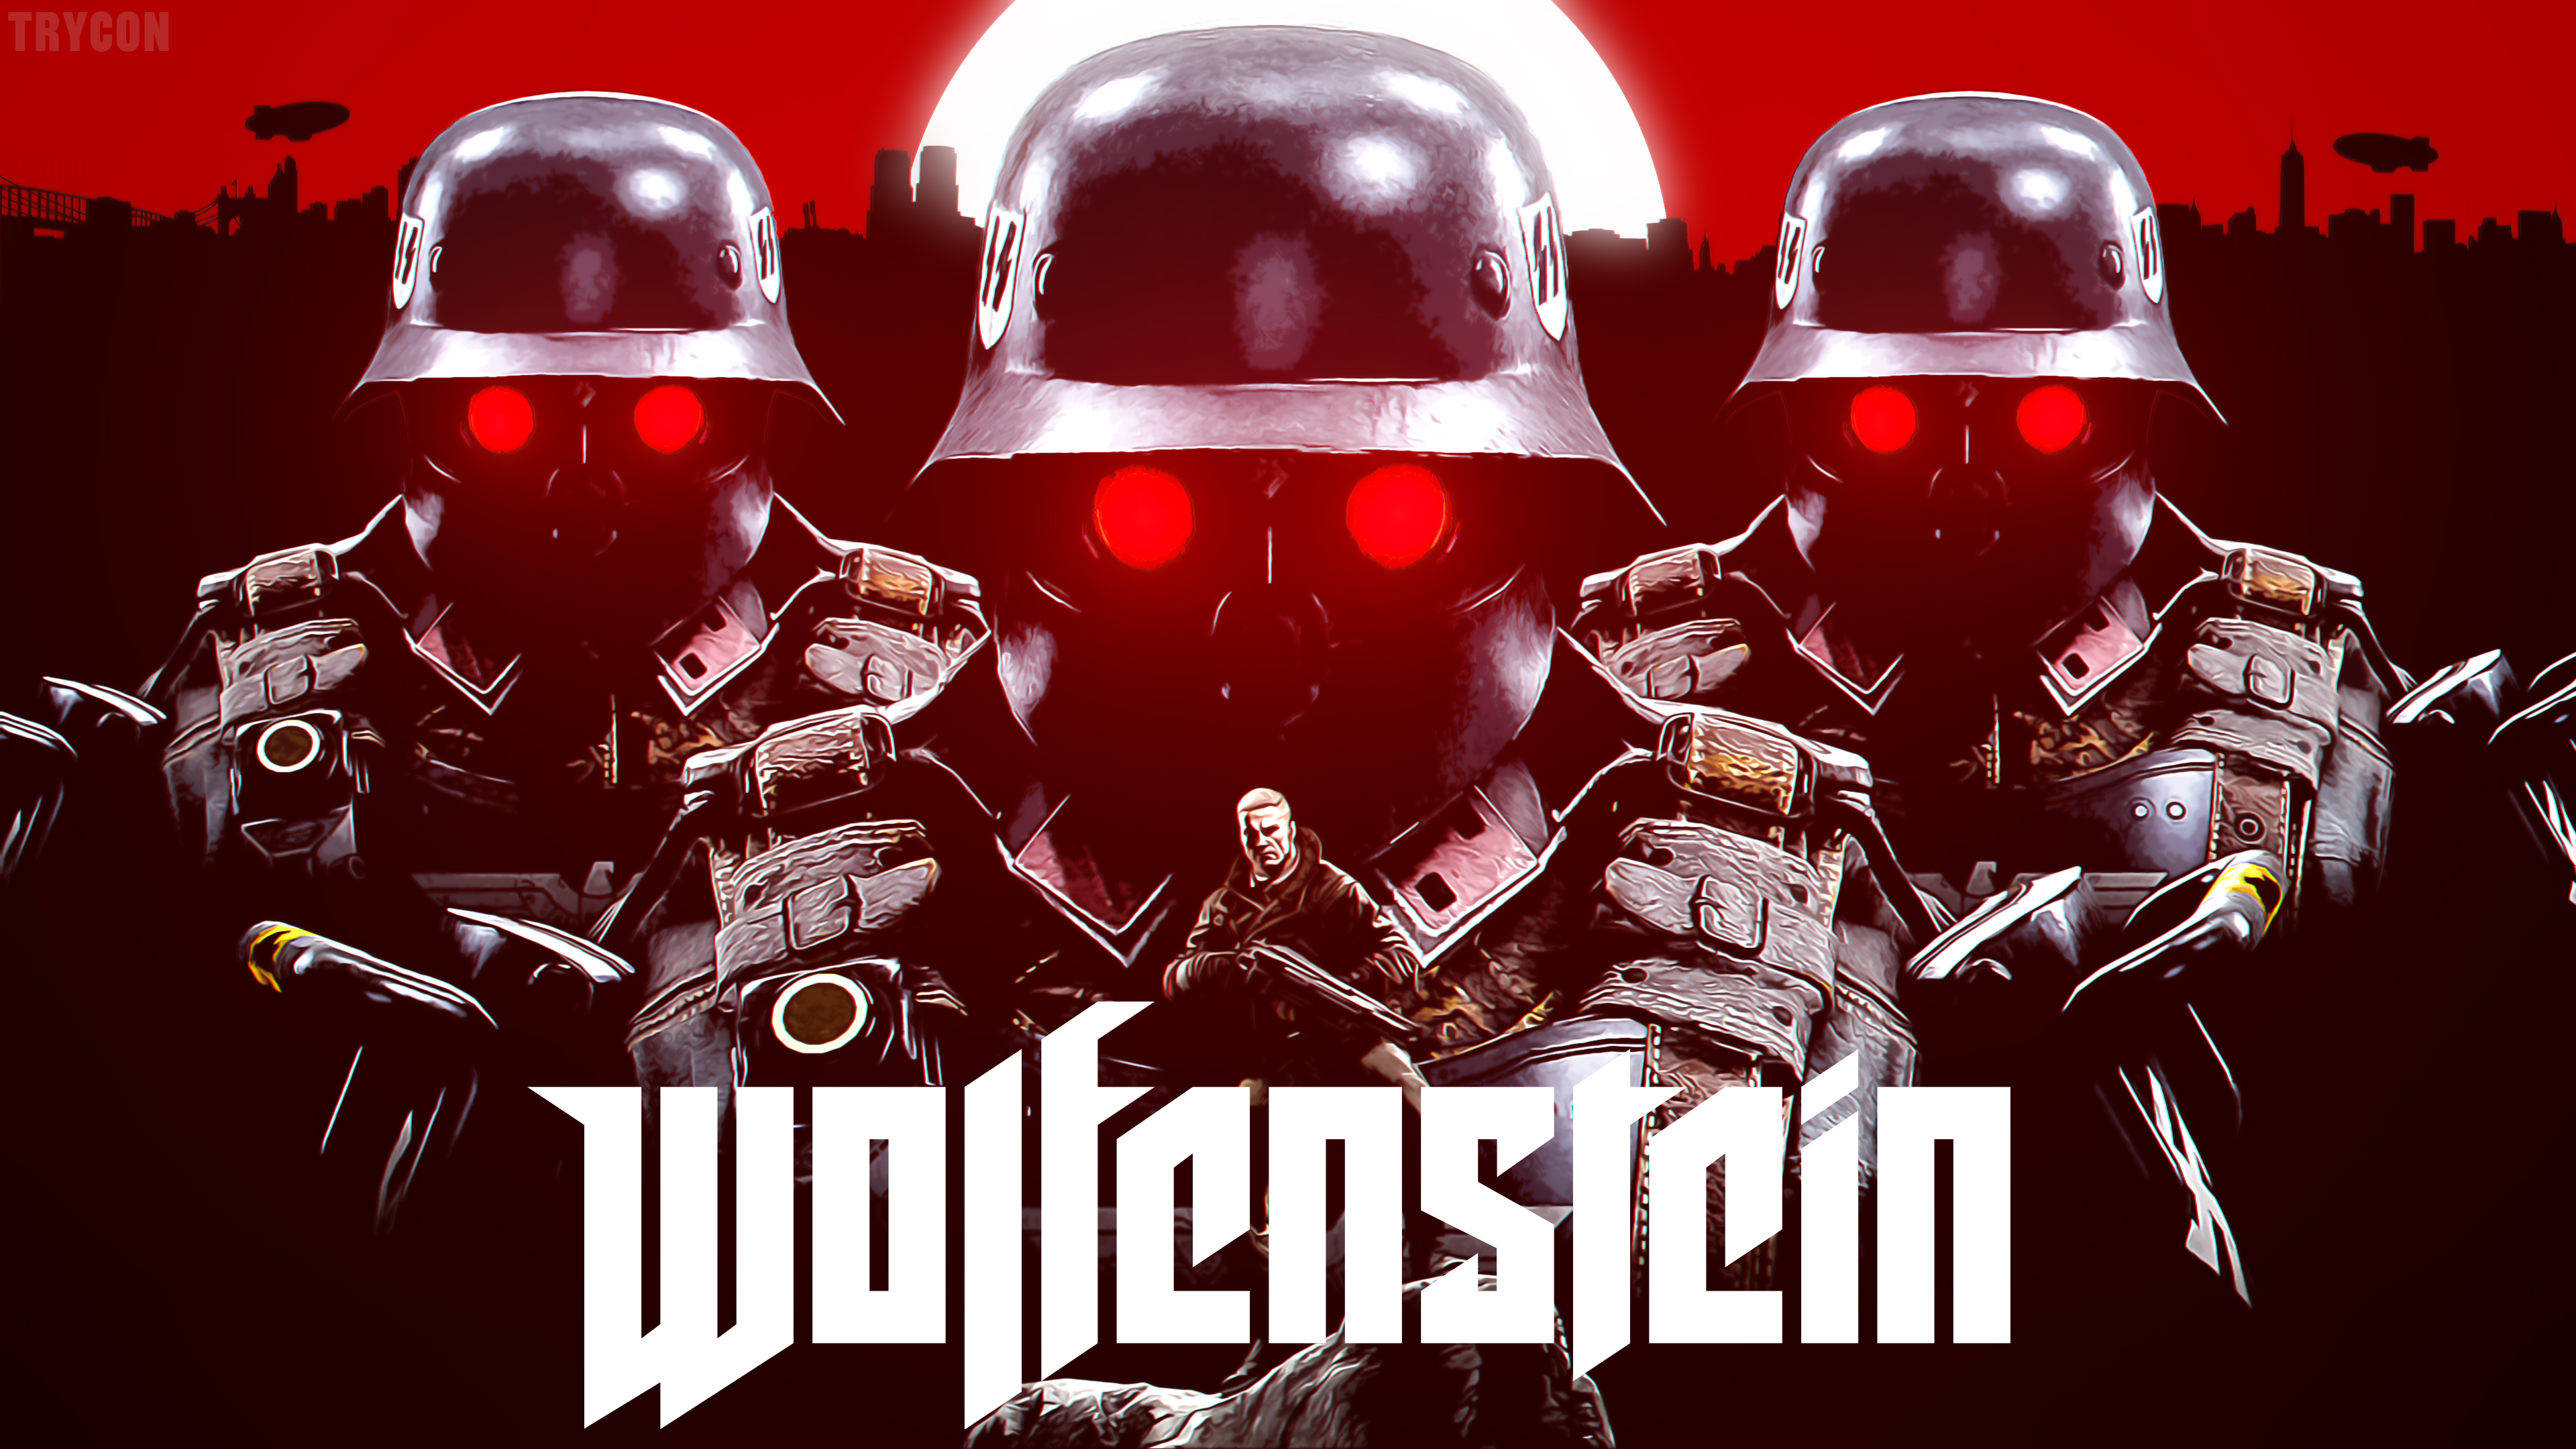 Wolfenstein The New Order - Icon by Blagoicons on DeviantArt